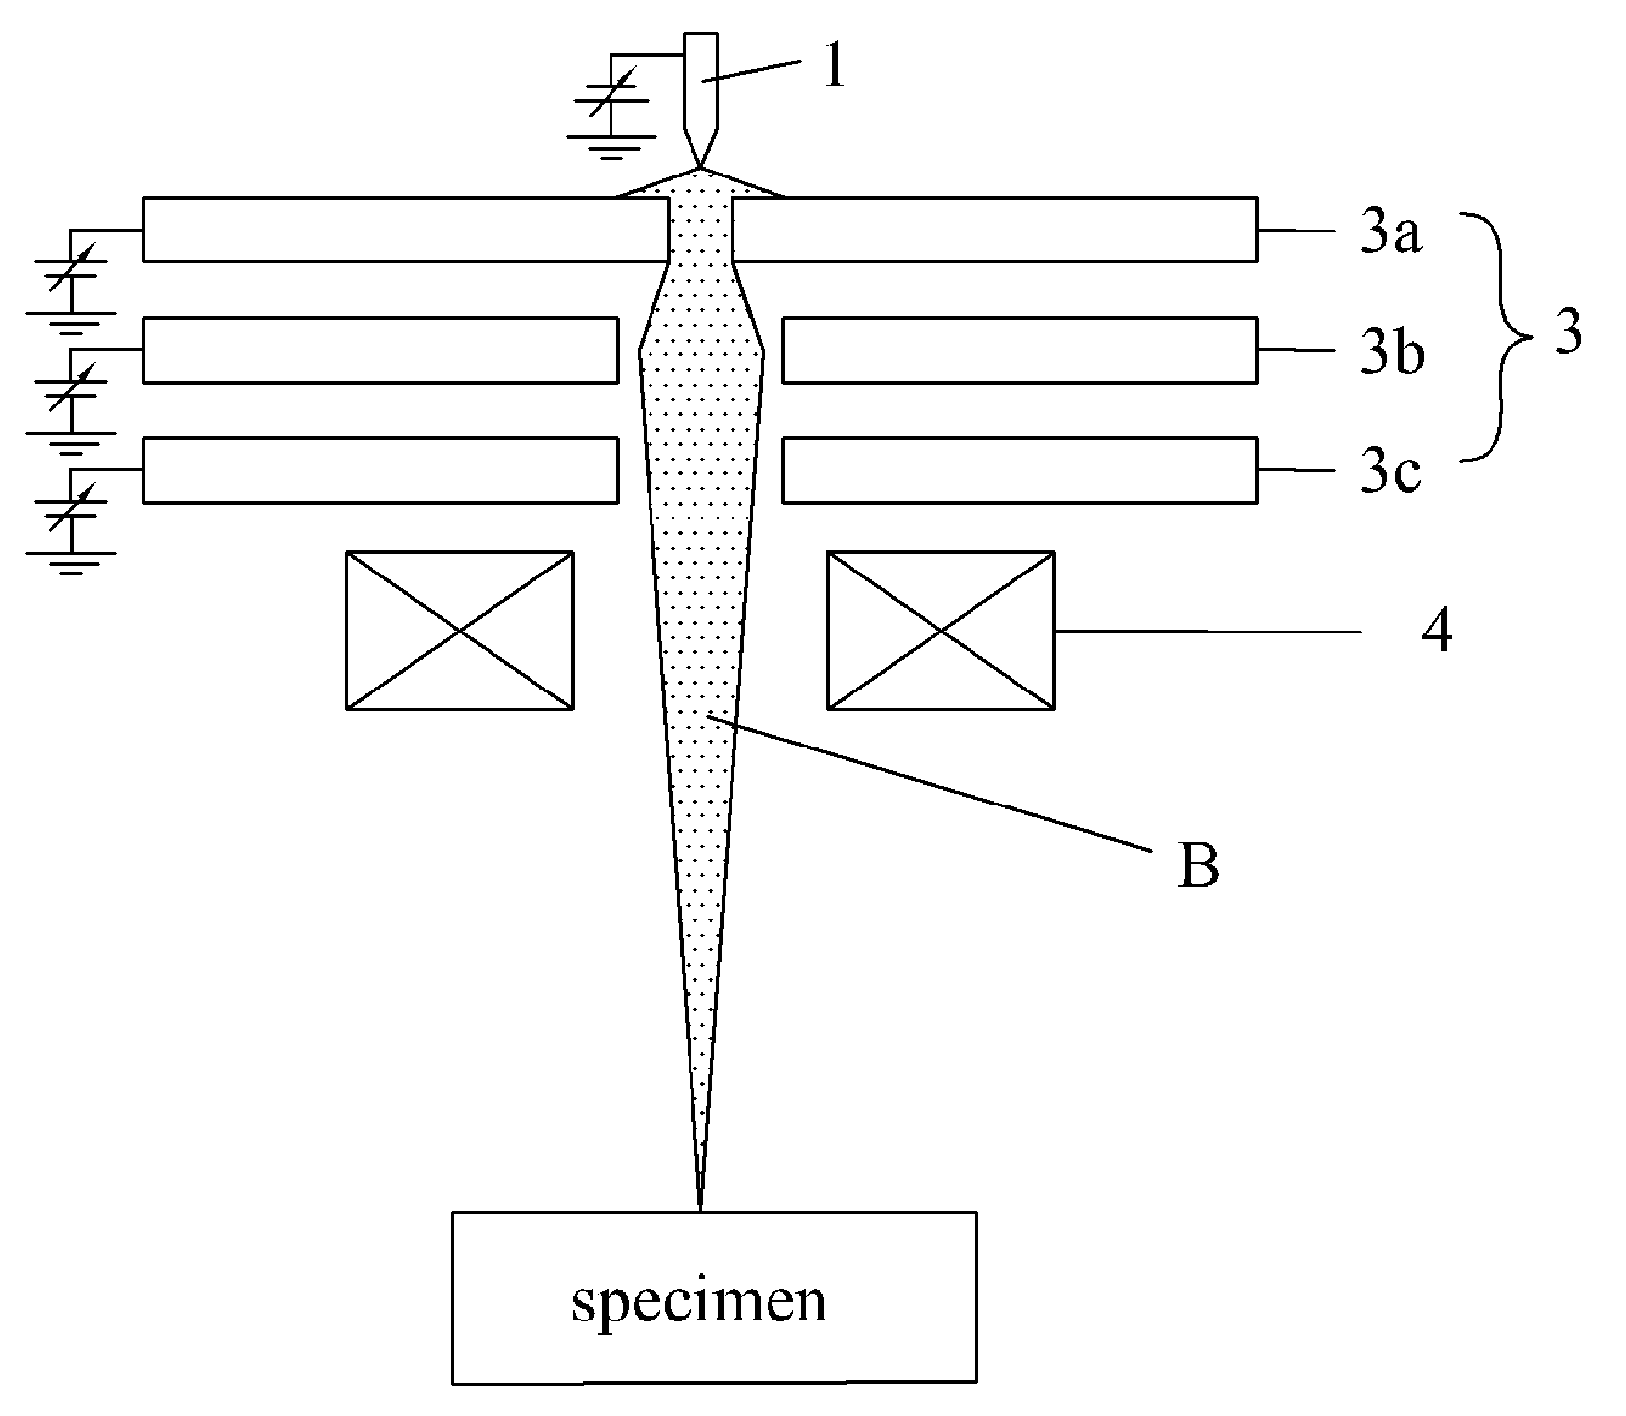 Method for Focusing Electron Beam in Electron Column